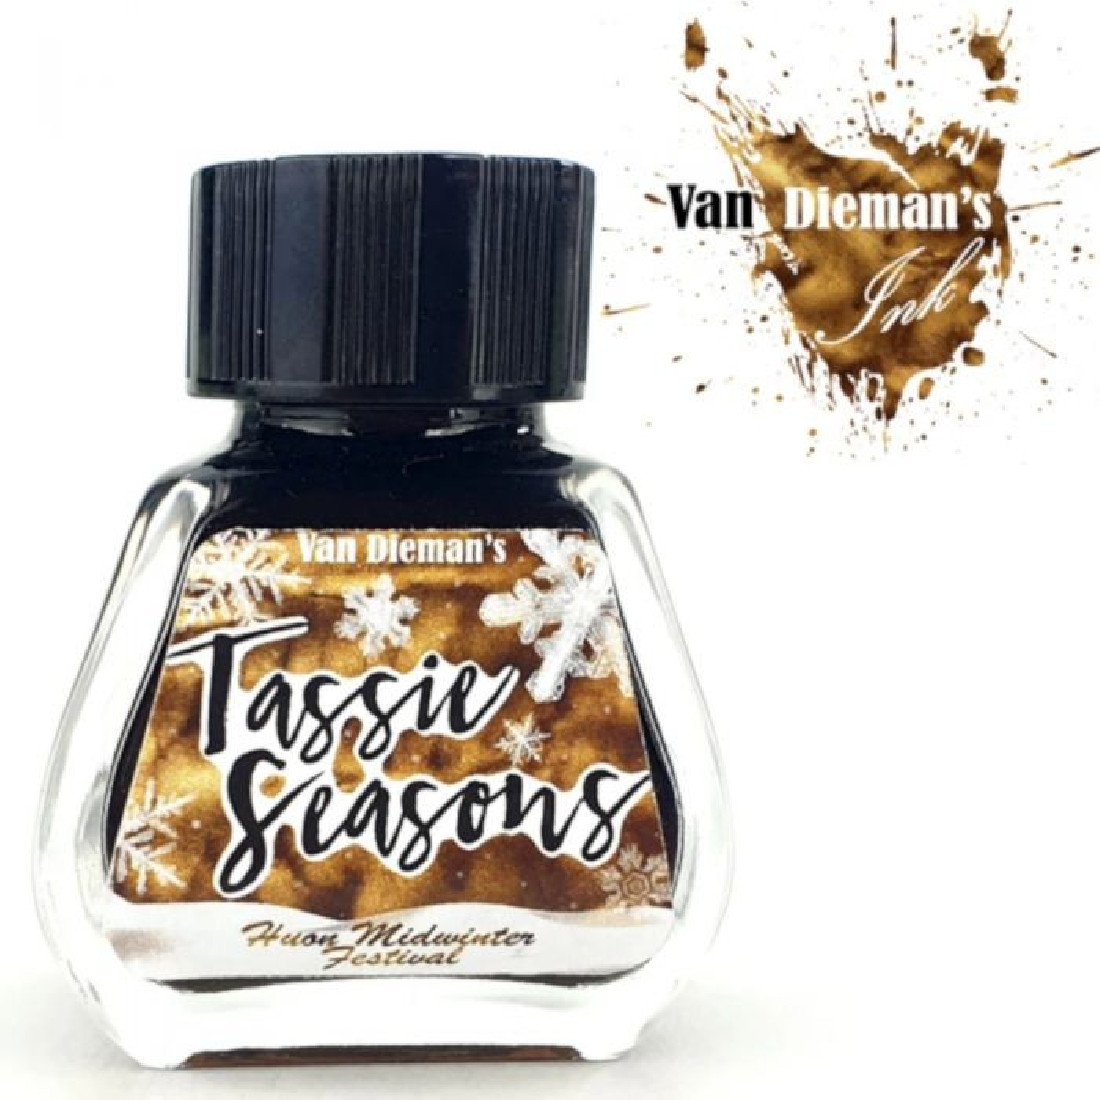 Van Diemans Tassie Seasons (Winter) Huon Midwinter Festival - Shimmer 30ml Ink